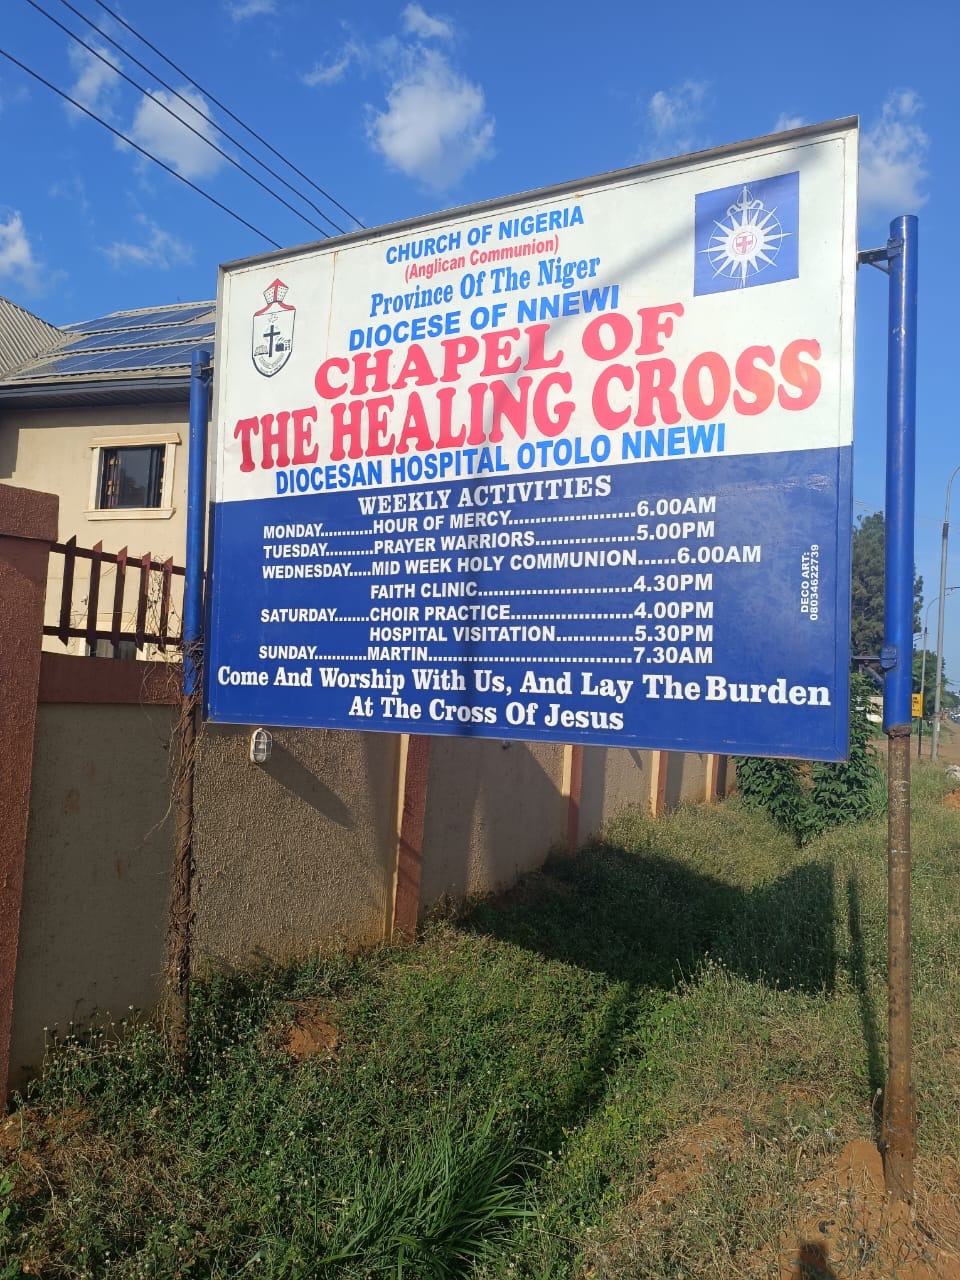 CHAPEL OF THE HEALING CROSS, NNEWI DIOCESAN HOSPITAL, OTOLO, NNEWI